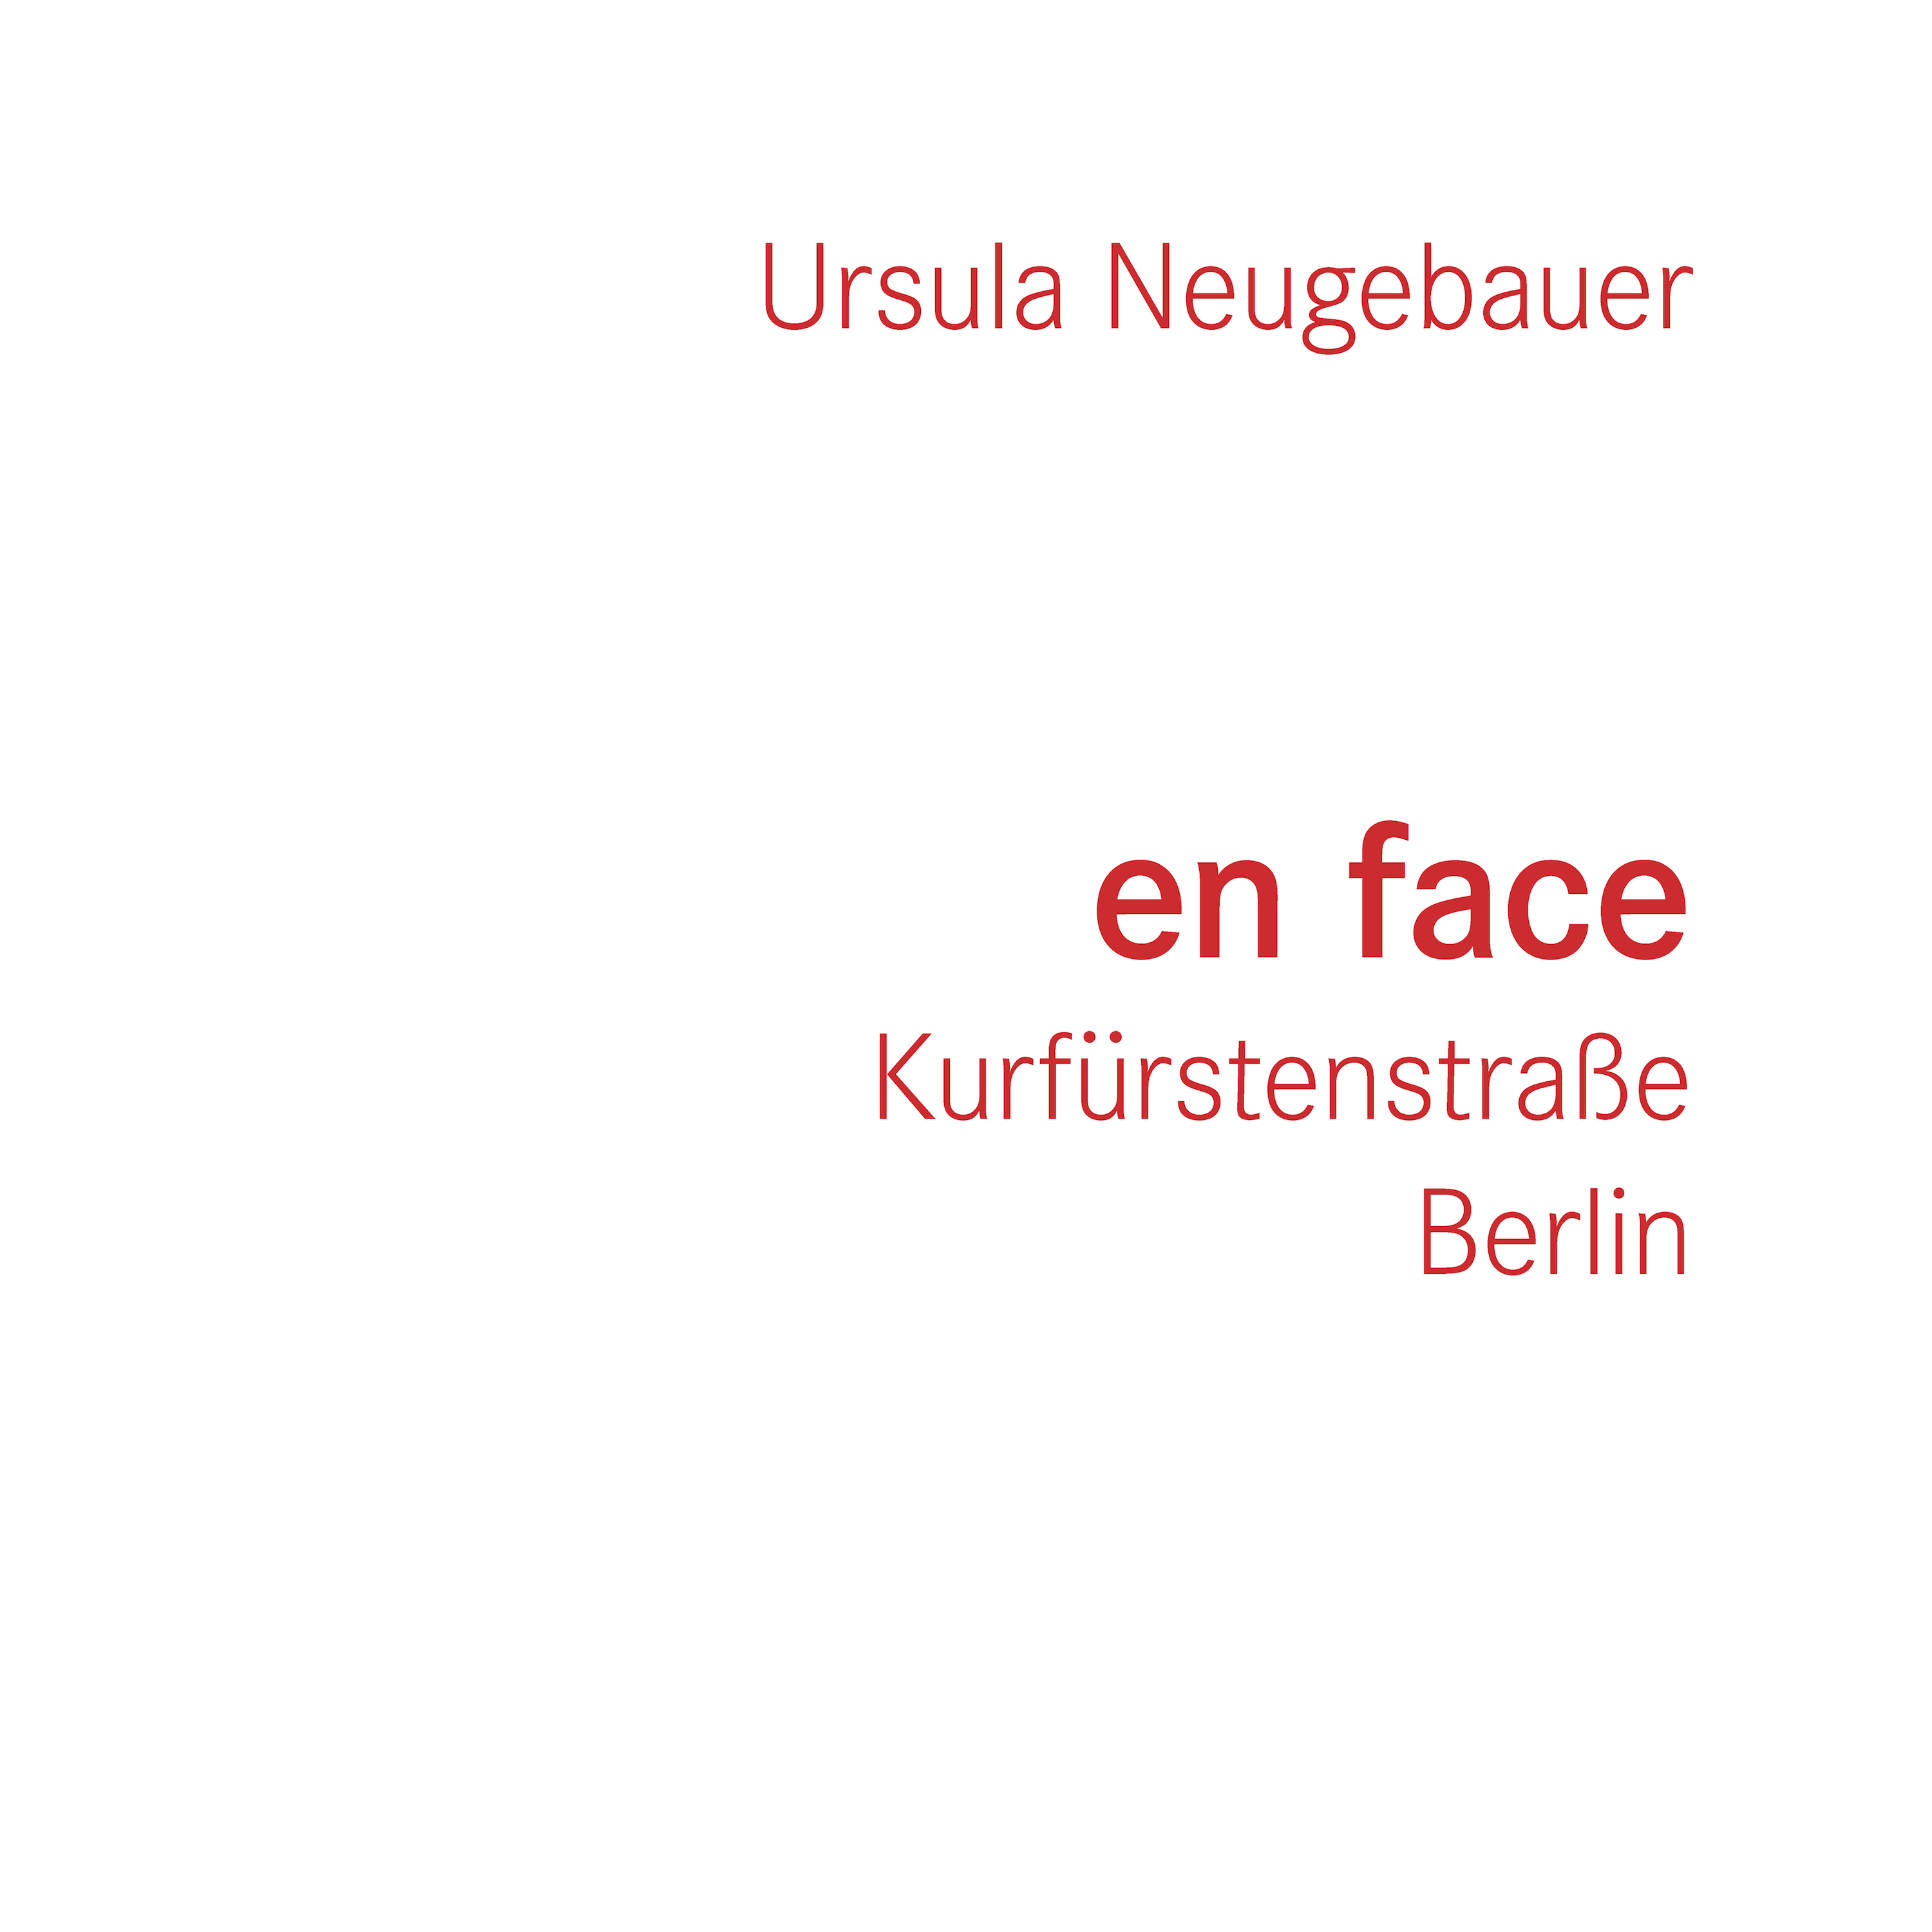 Ursula Neugebauer: en face. Kurfürstenstraße Berlin, Bild: Dortmund: Kettler, 2015.